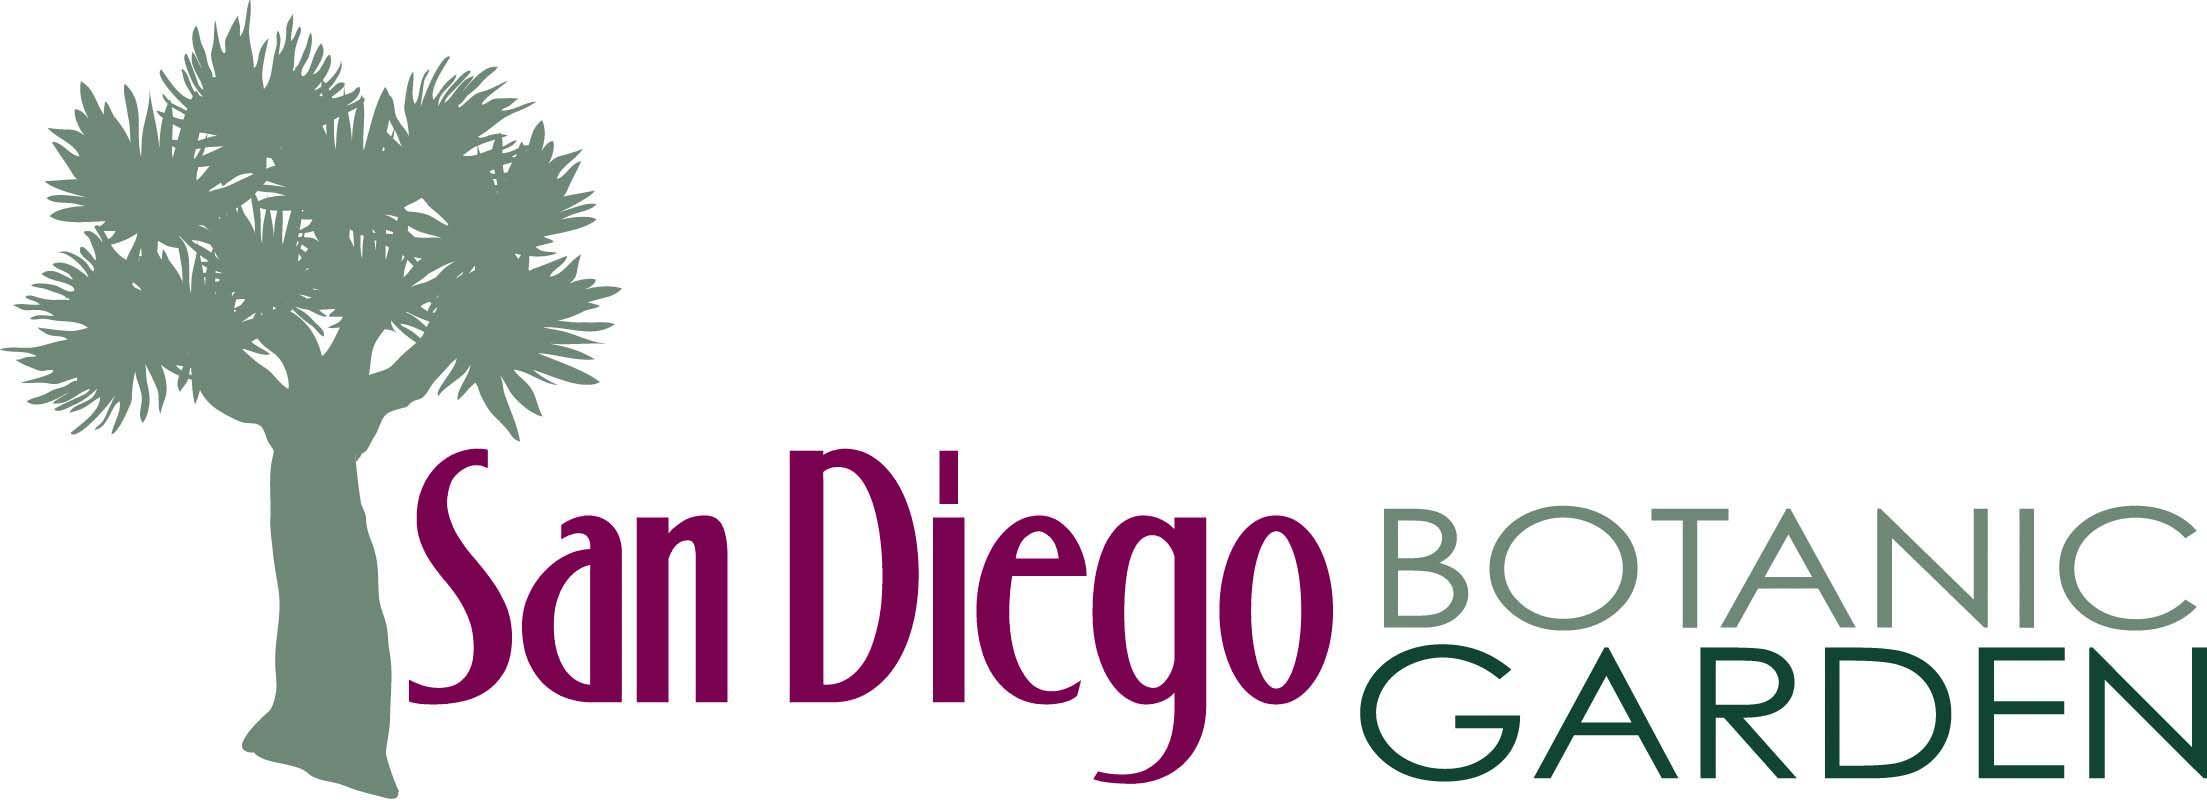 Botanical Garden Logo - San Diego Botanic Garden - Located North of San Diego in Encinitas ...